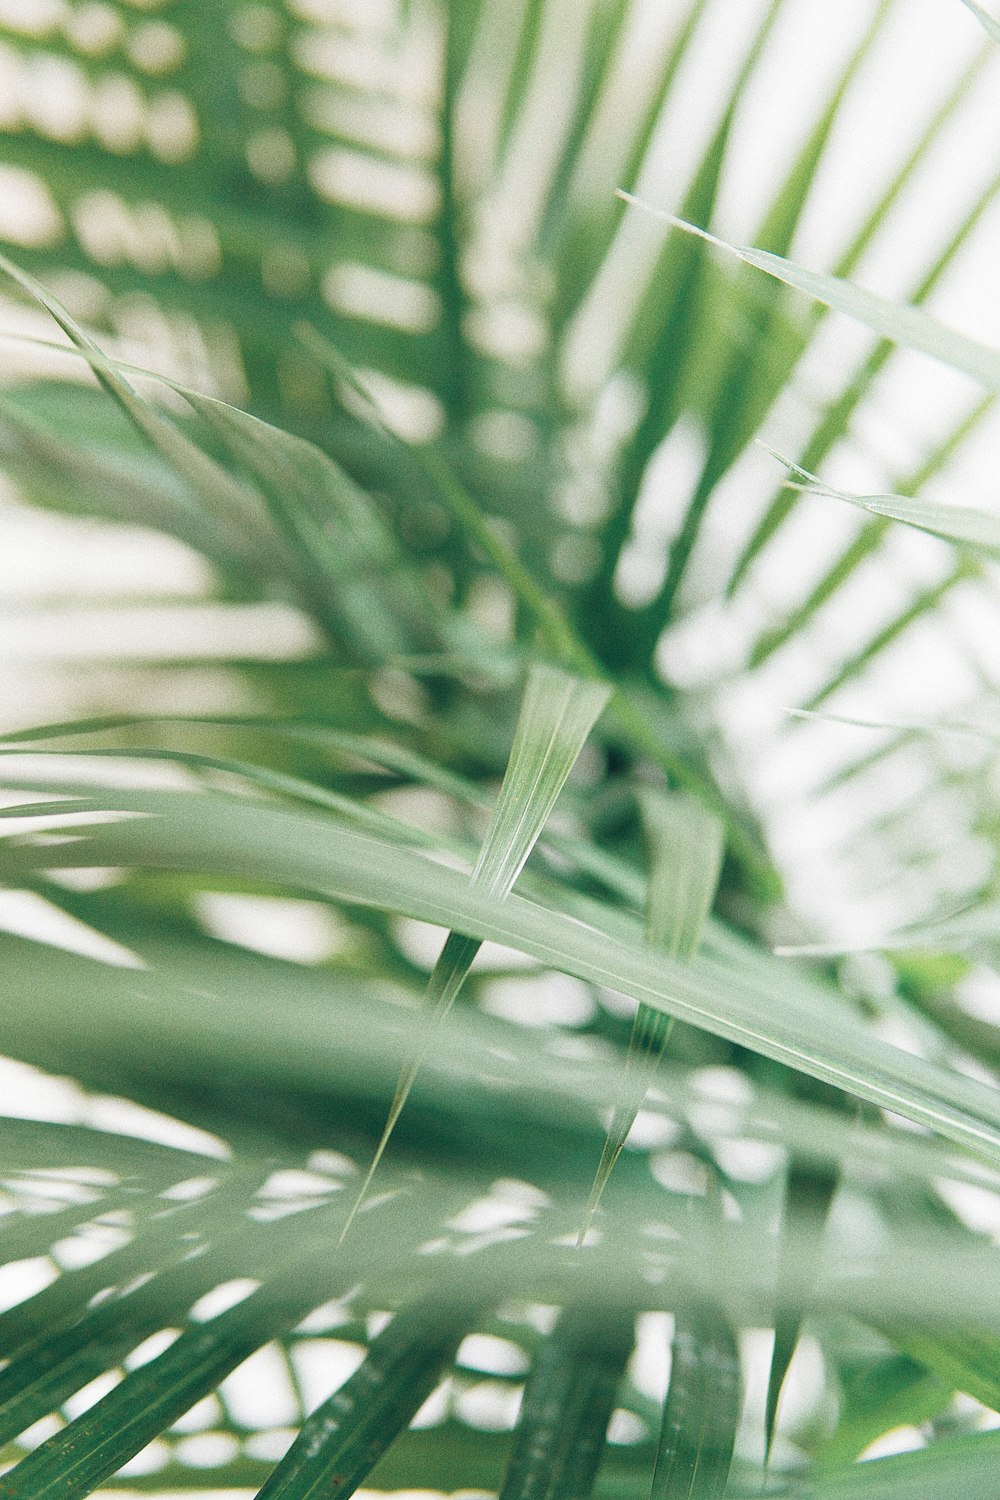 fotografia ravvicinata di foglie di palma verdi